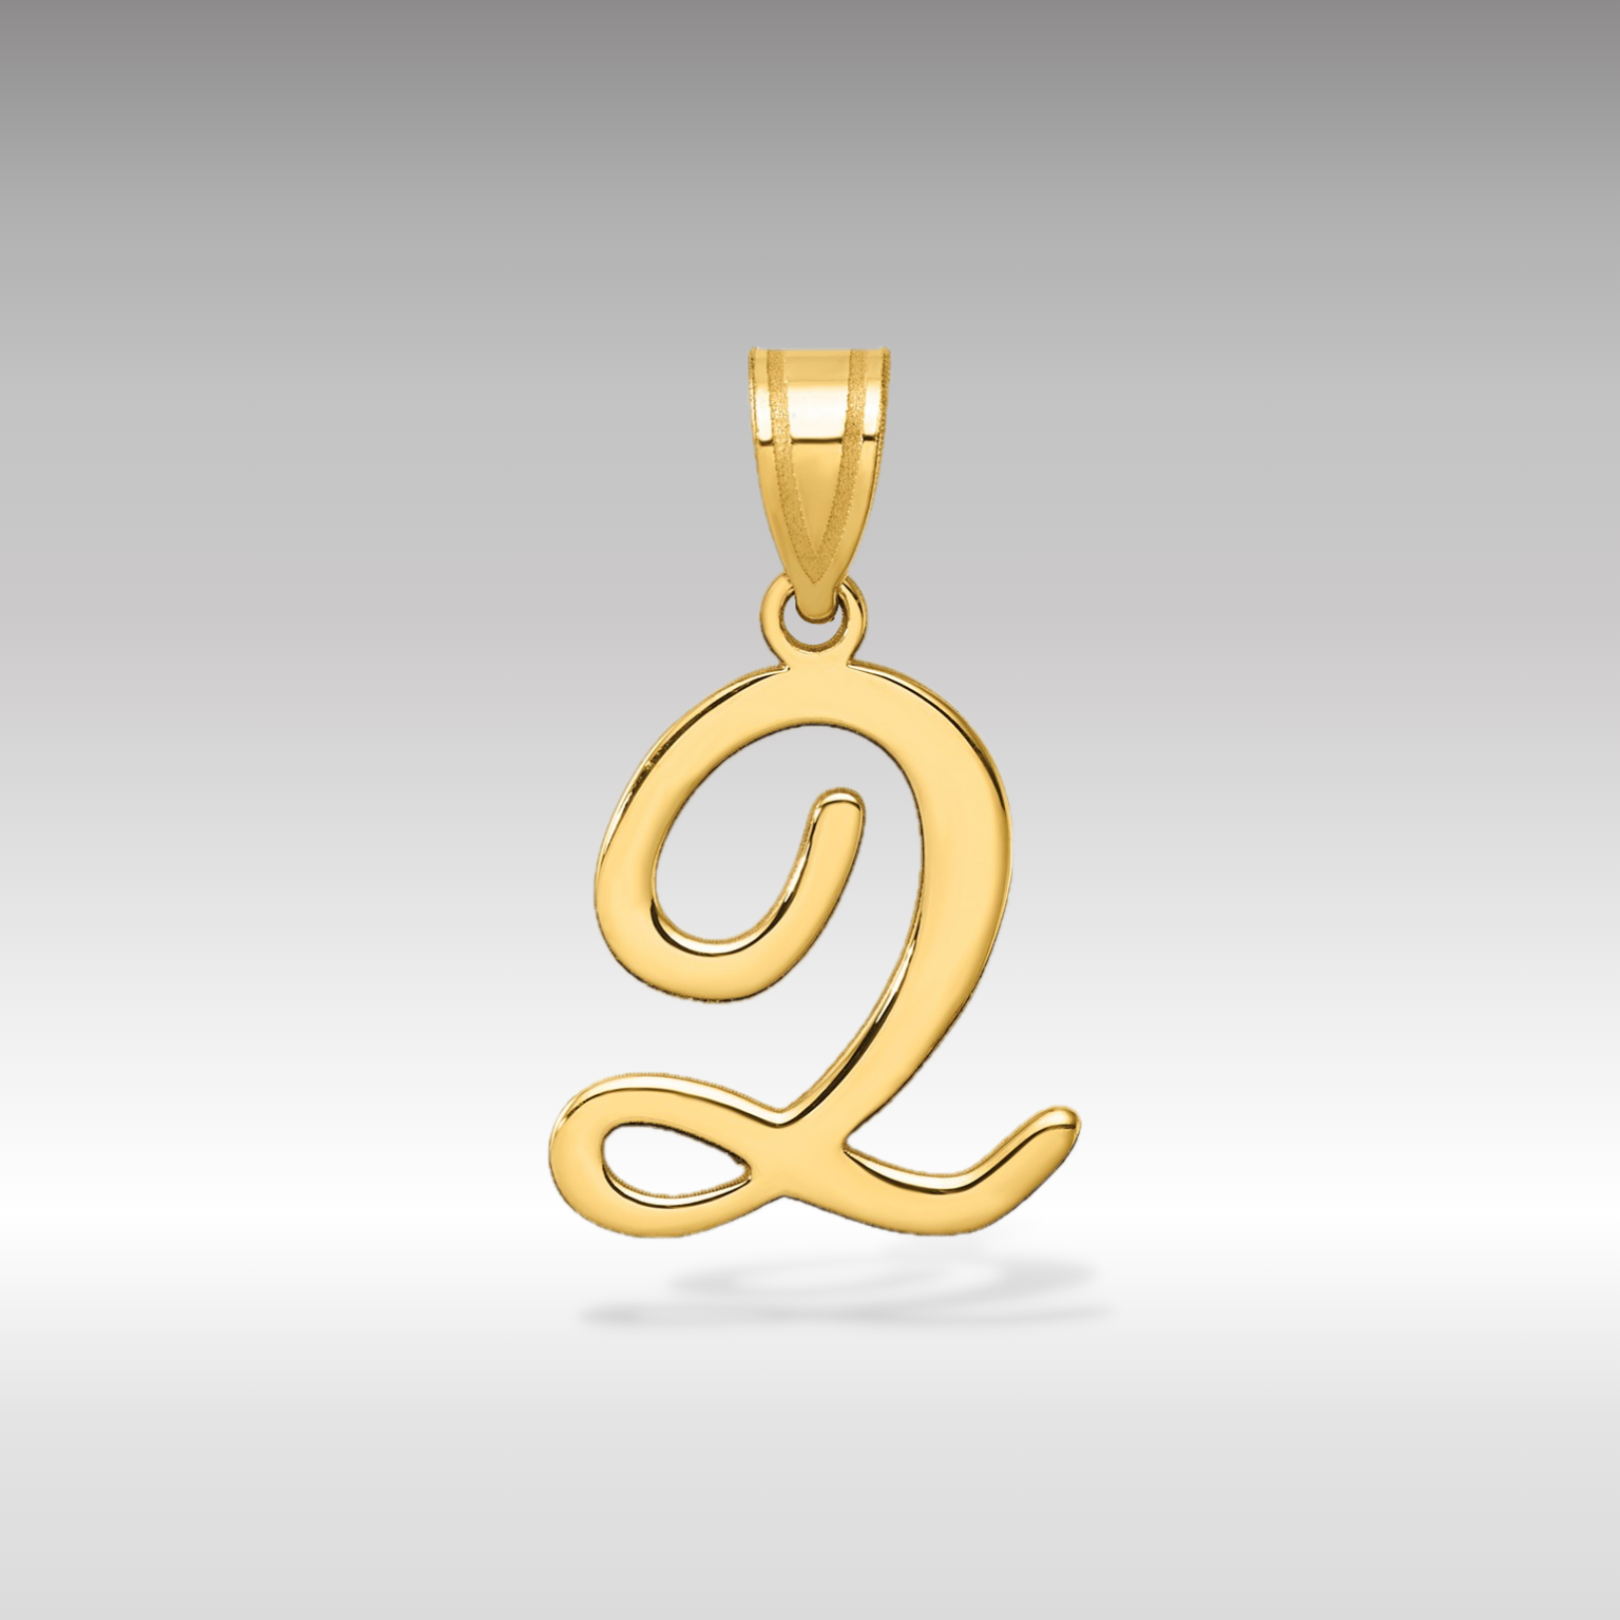 14K Gold Large Letter "Q" Script Initial Pendant - Charlie & Co. Jewelry